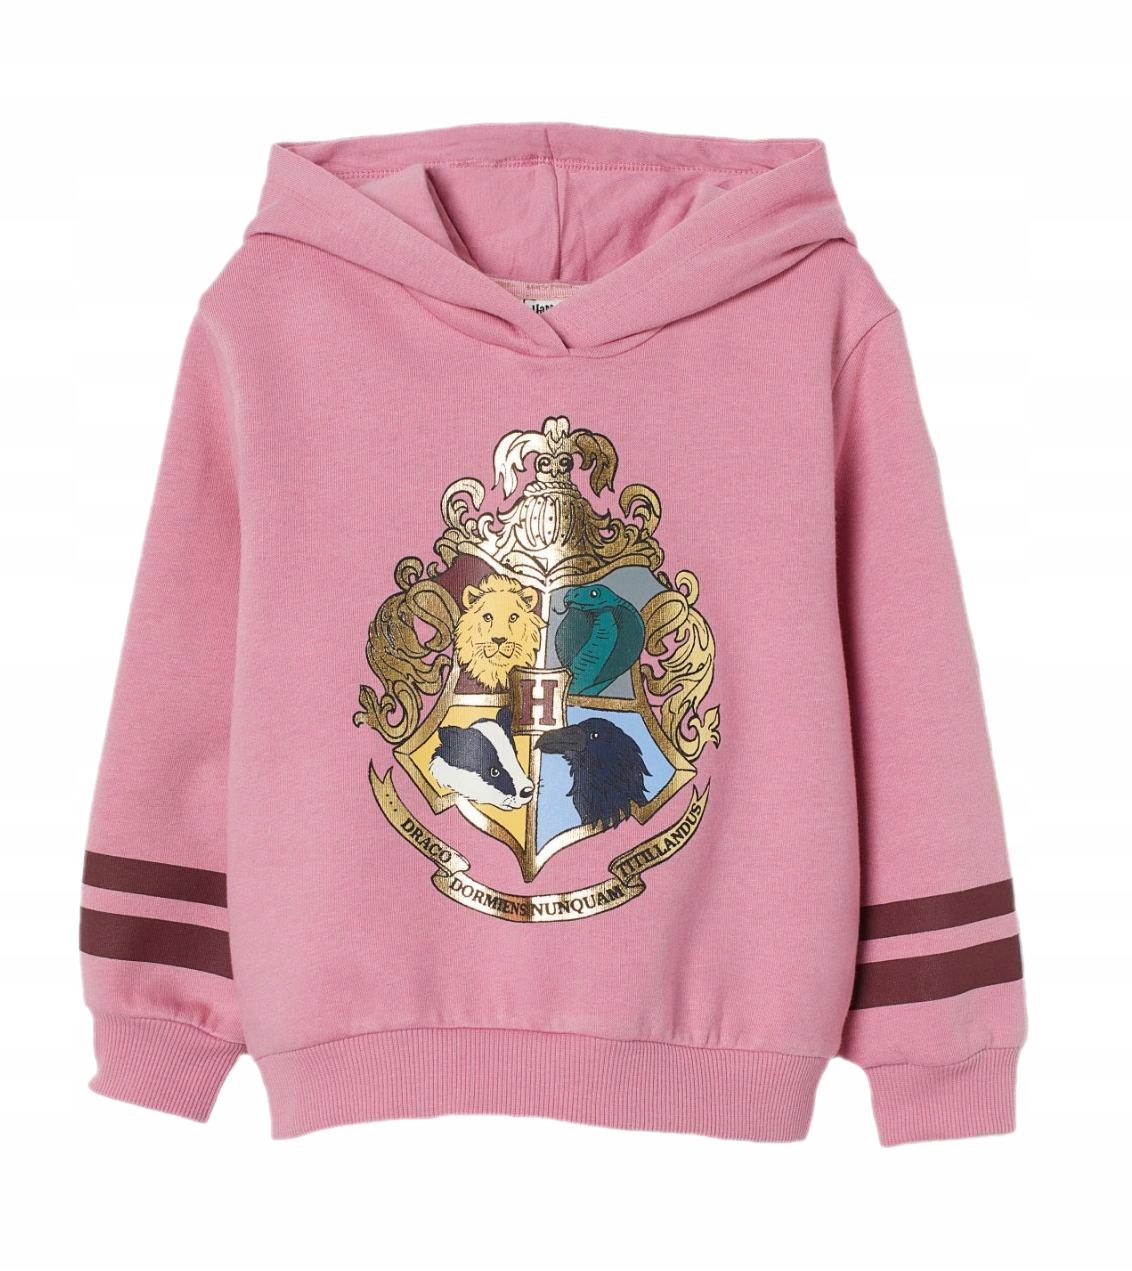 H&M bluza różowa Harry Potter 98/104 12660443082 - Allegro.pl